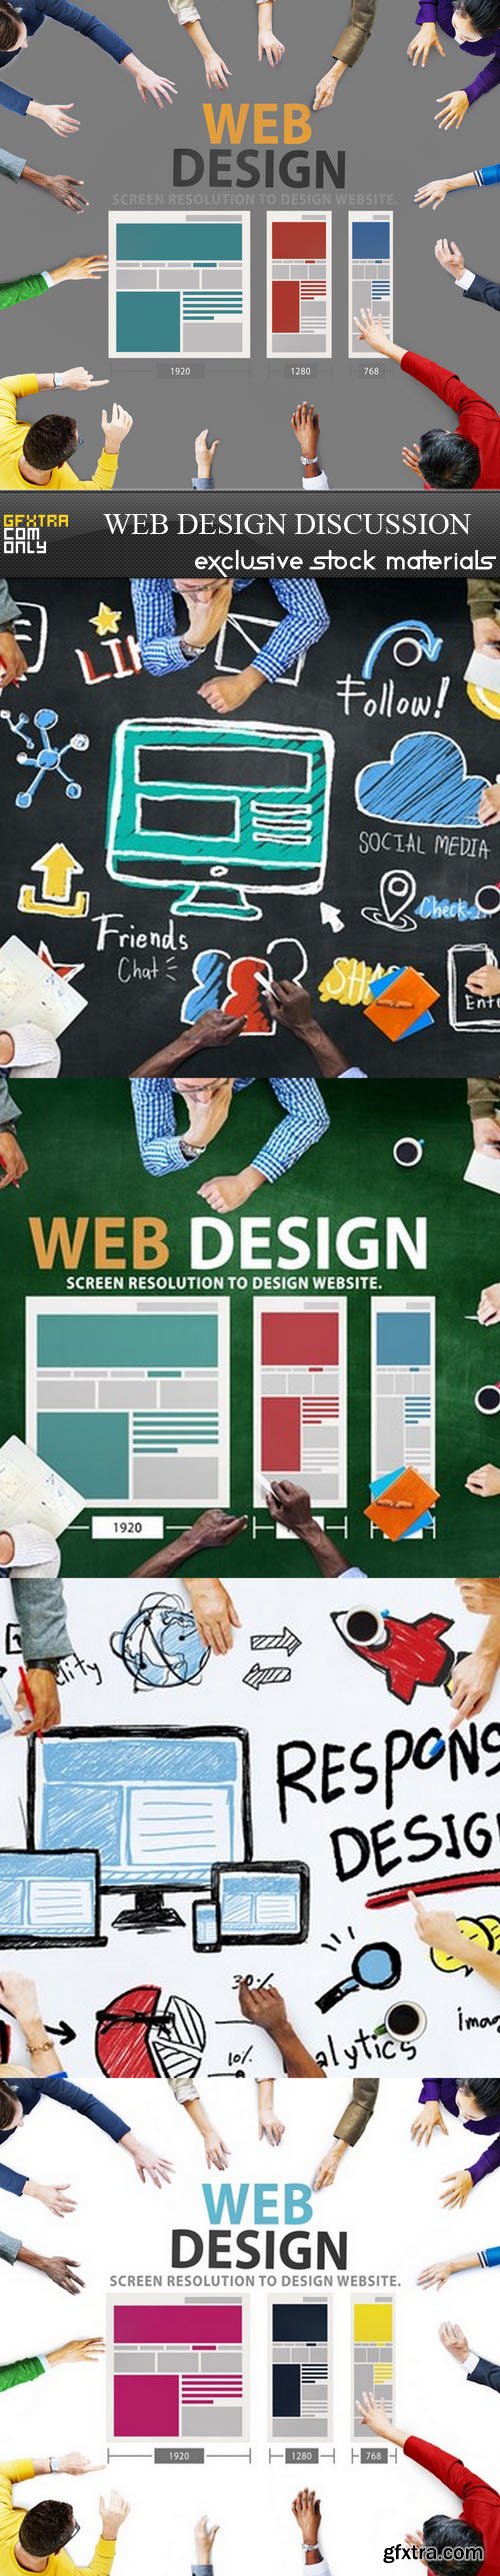 Web Design Discussion